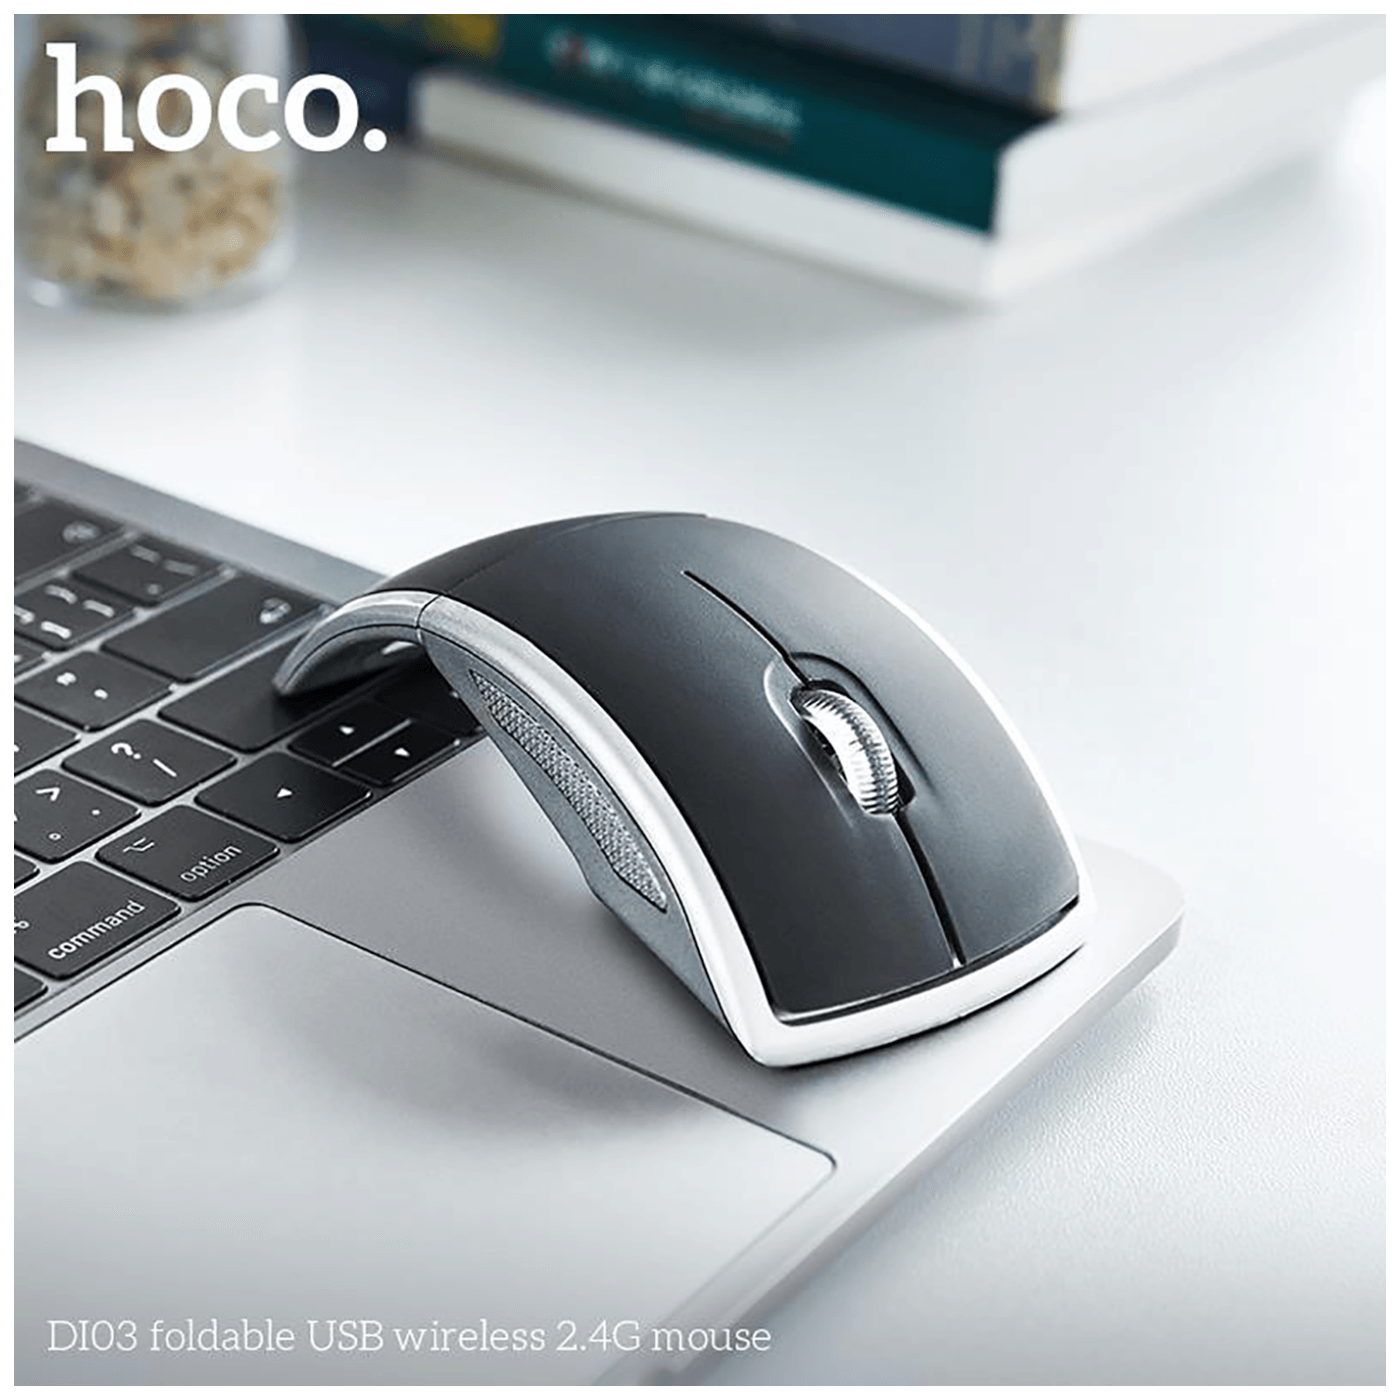 Hoco Wireless Foldable Mouse - DI03